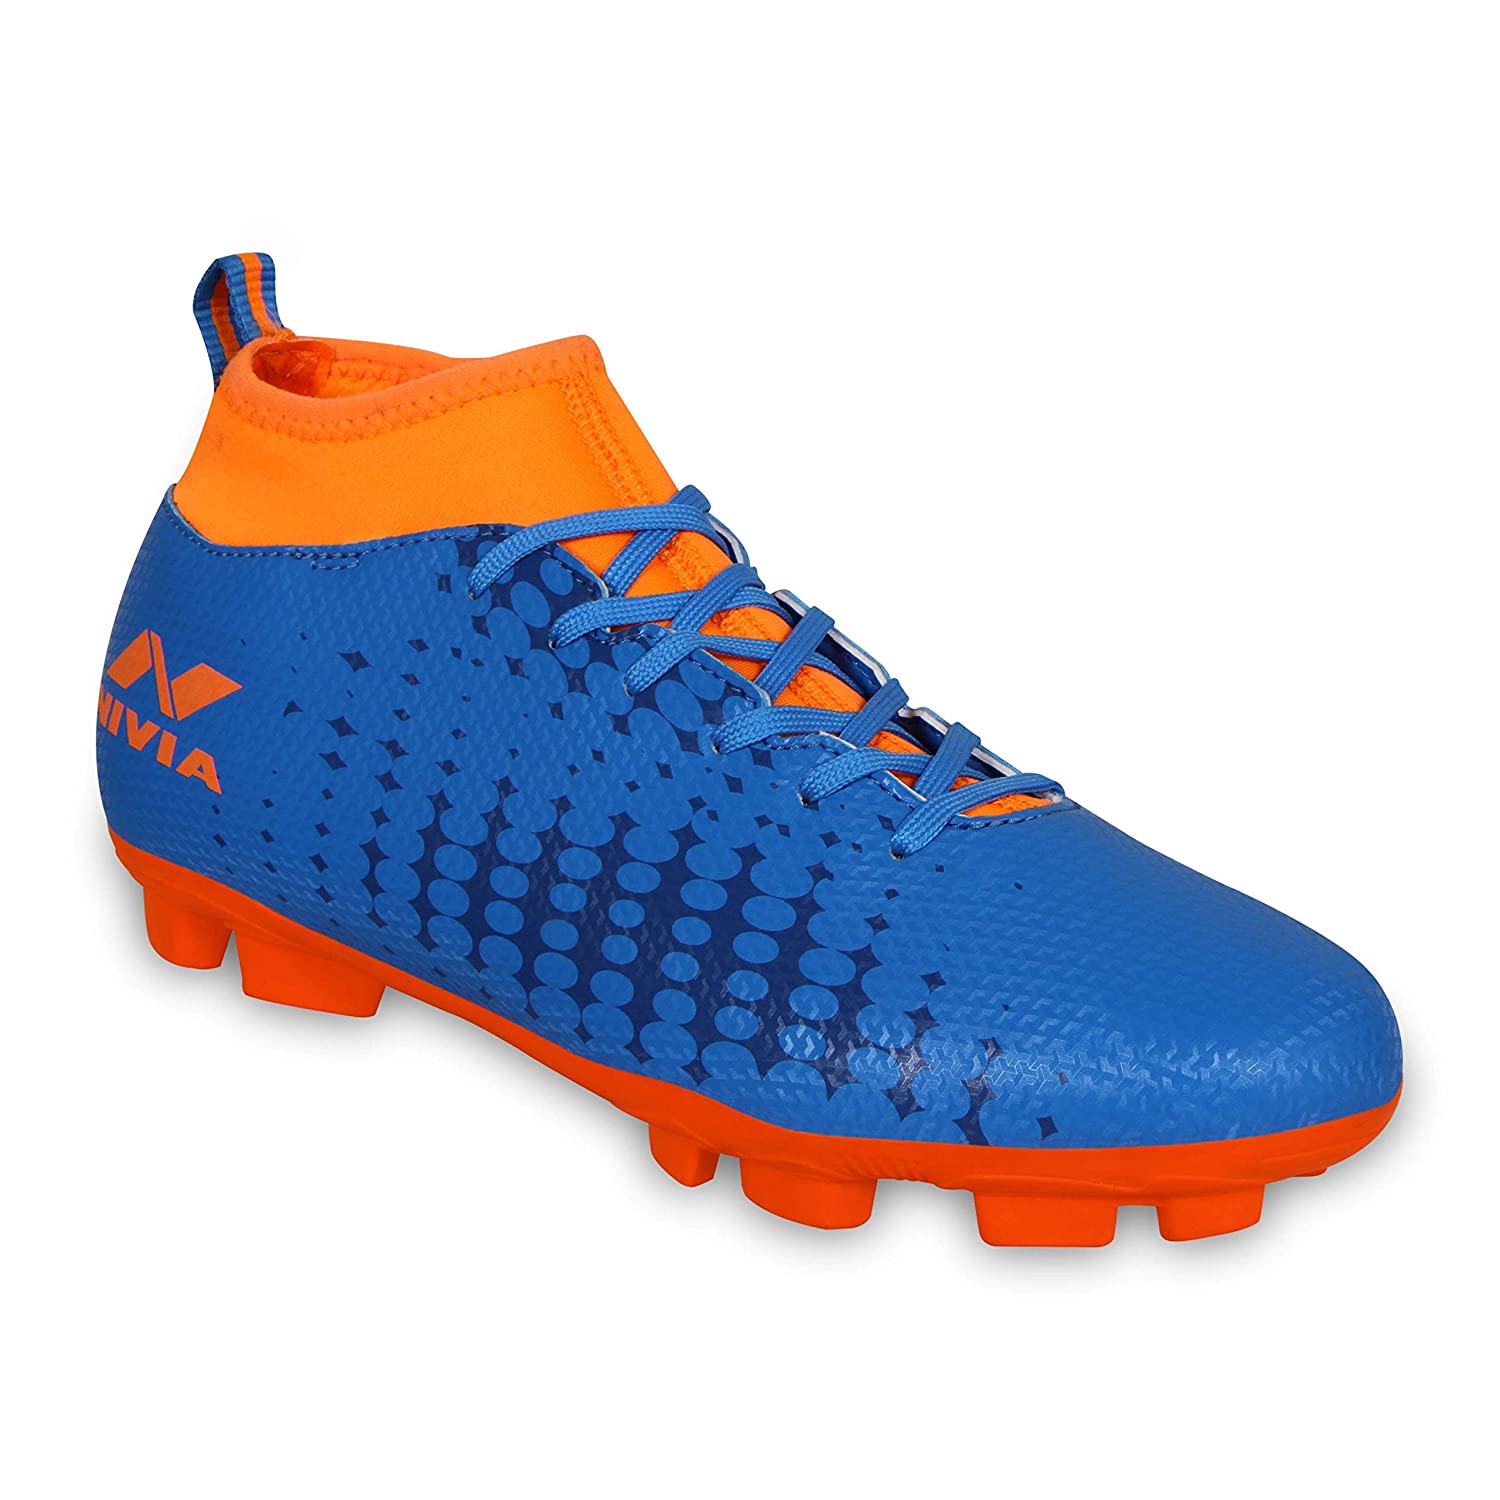 Nivia Ultra 2.0 Football Studs, Blue/Orange - Best Price online Prokicksports.com